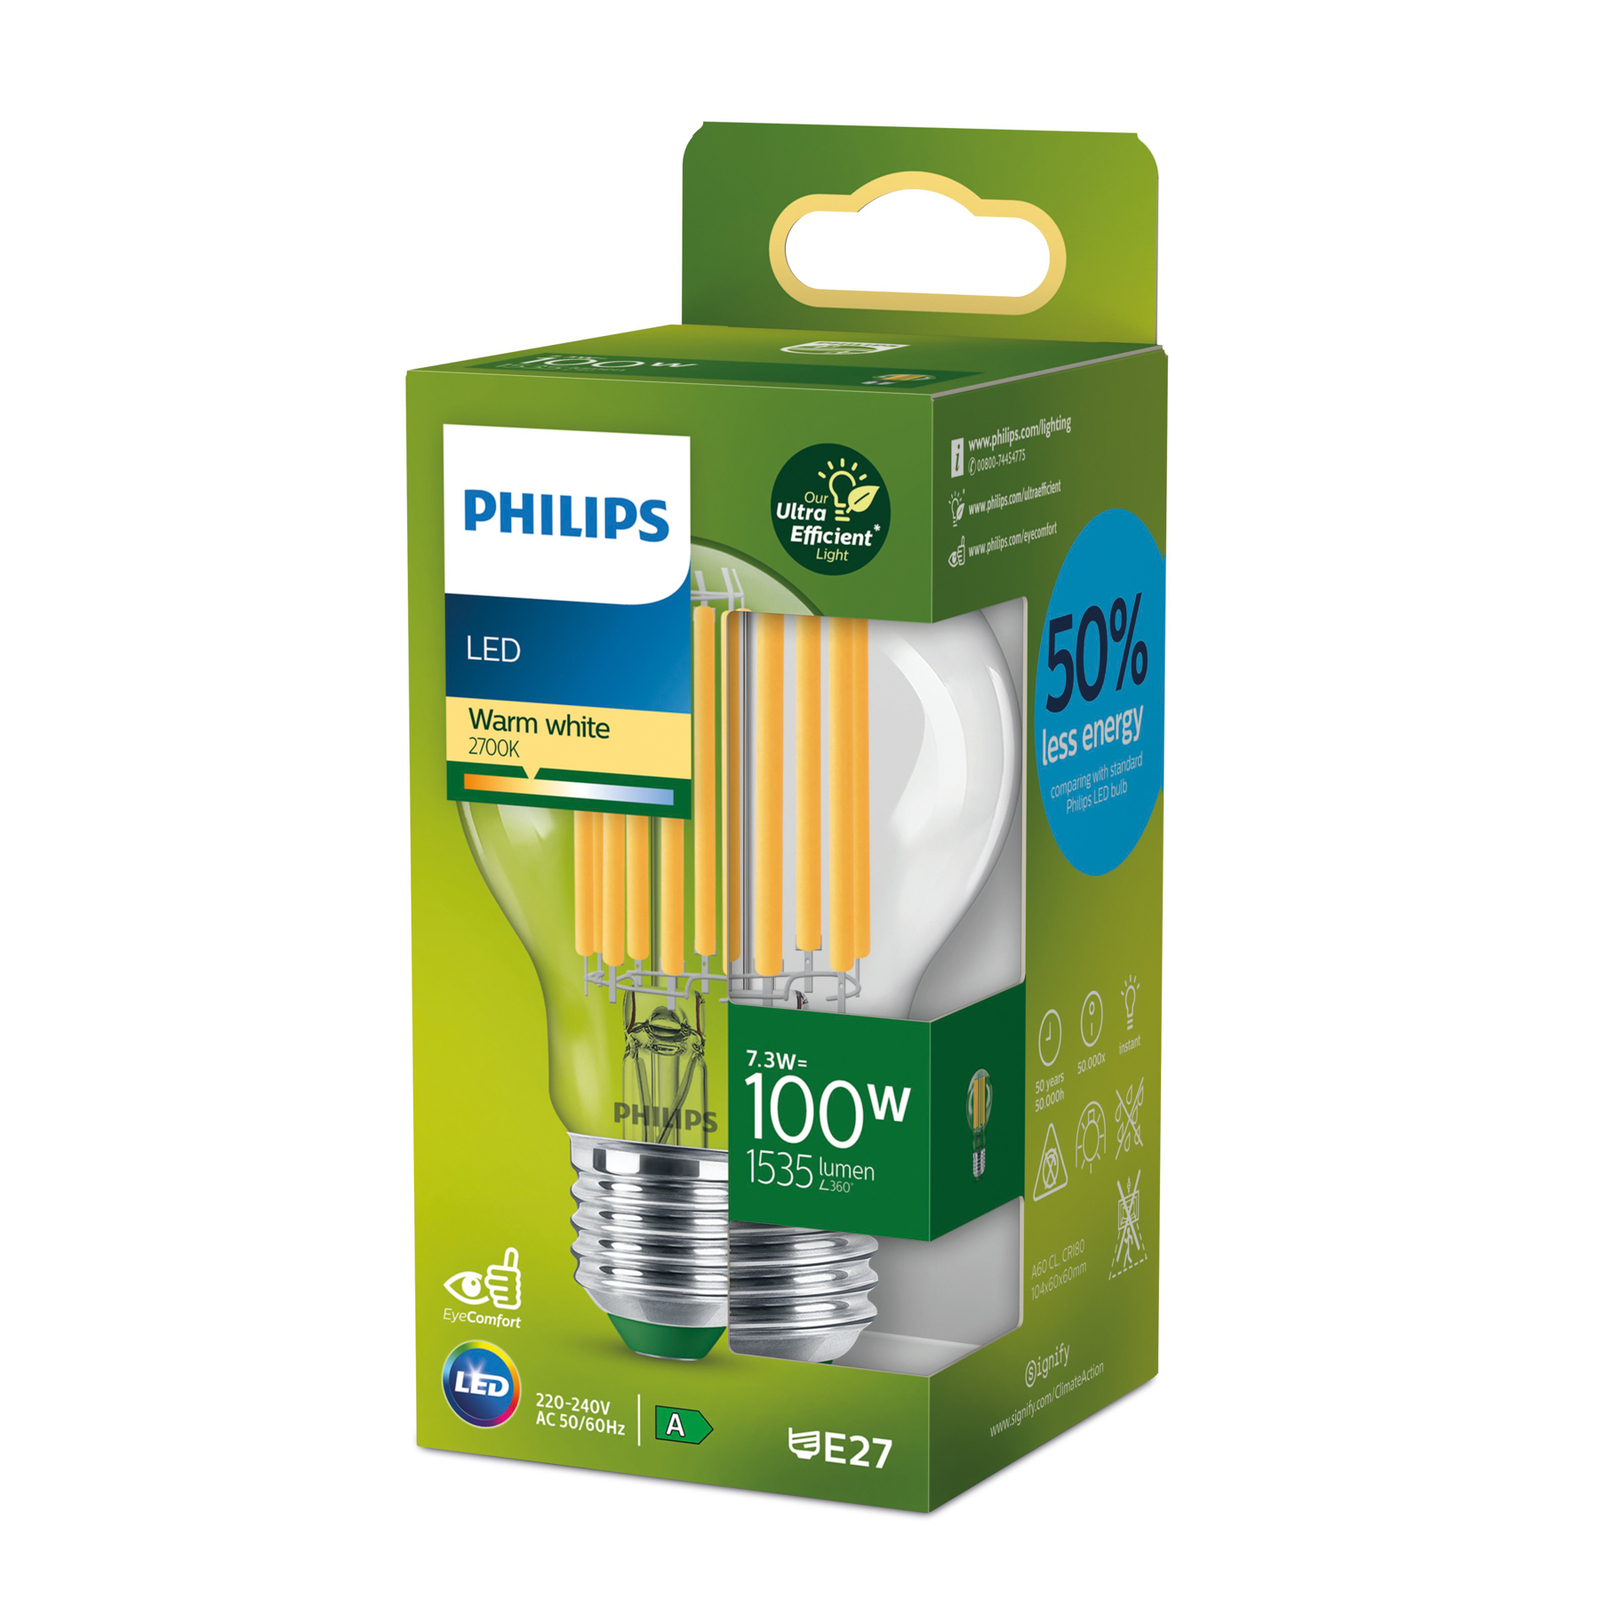 Philips E27 LED bulb A60 7.3W 1535lm 2,700K clear